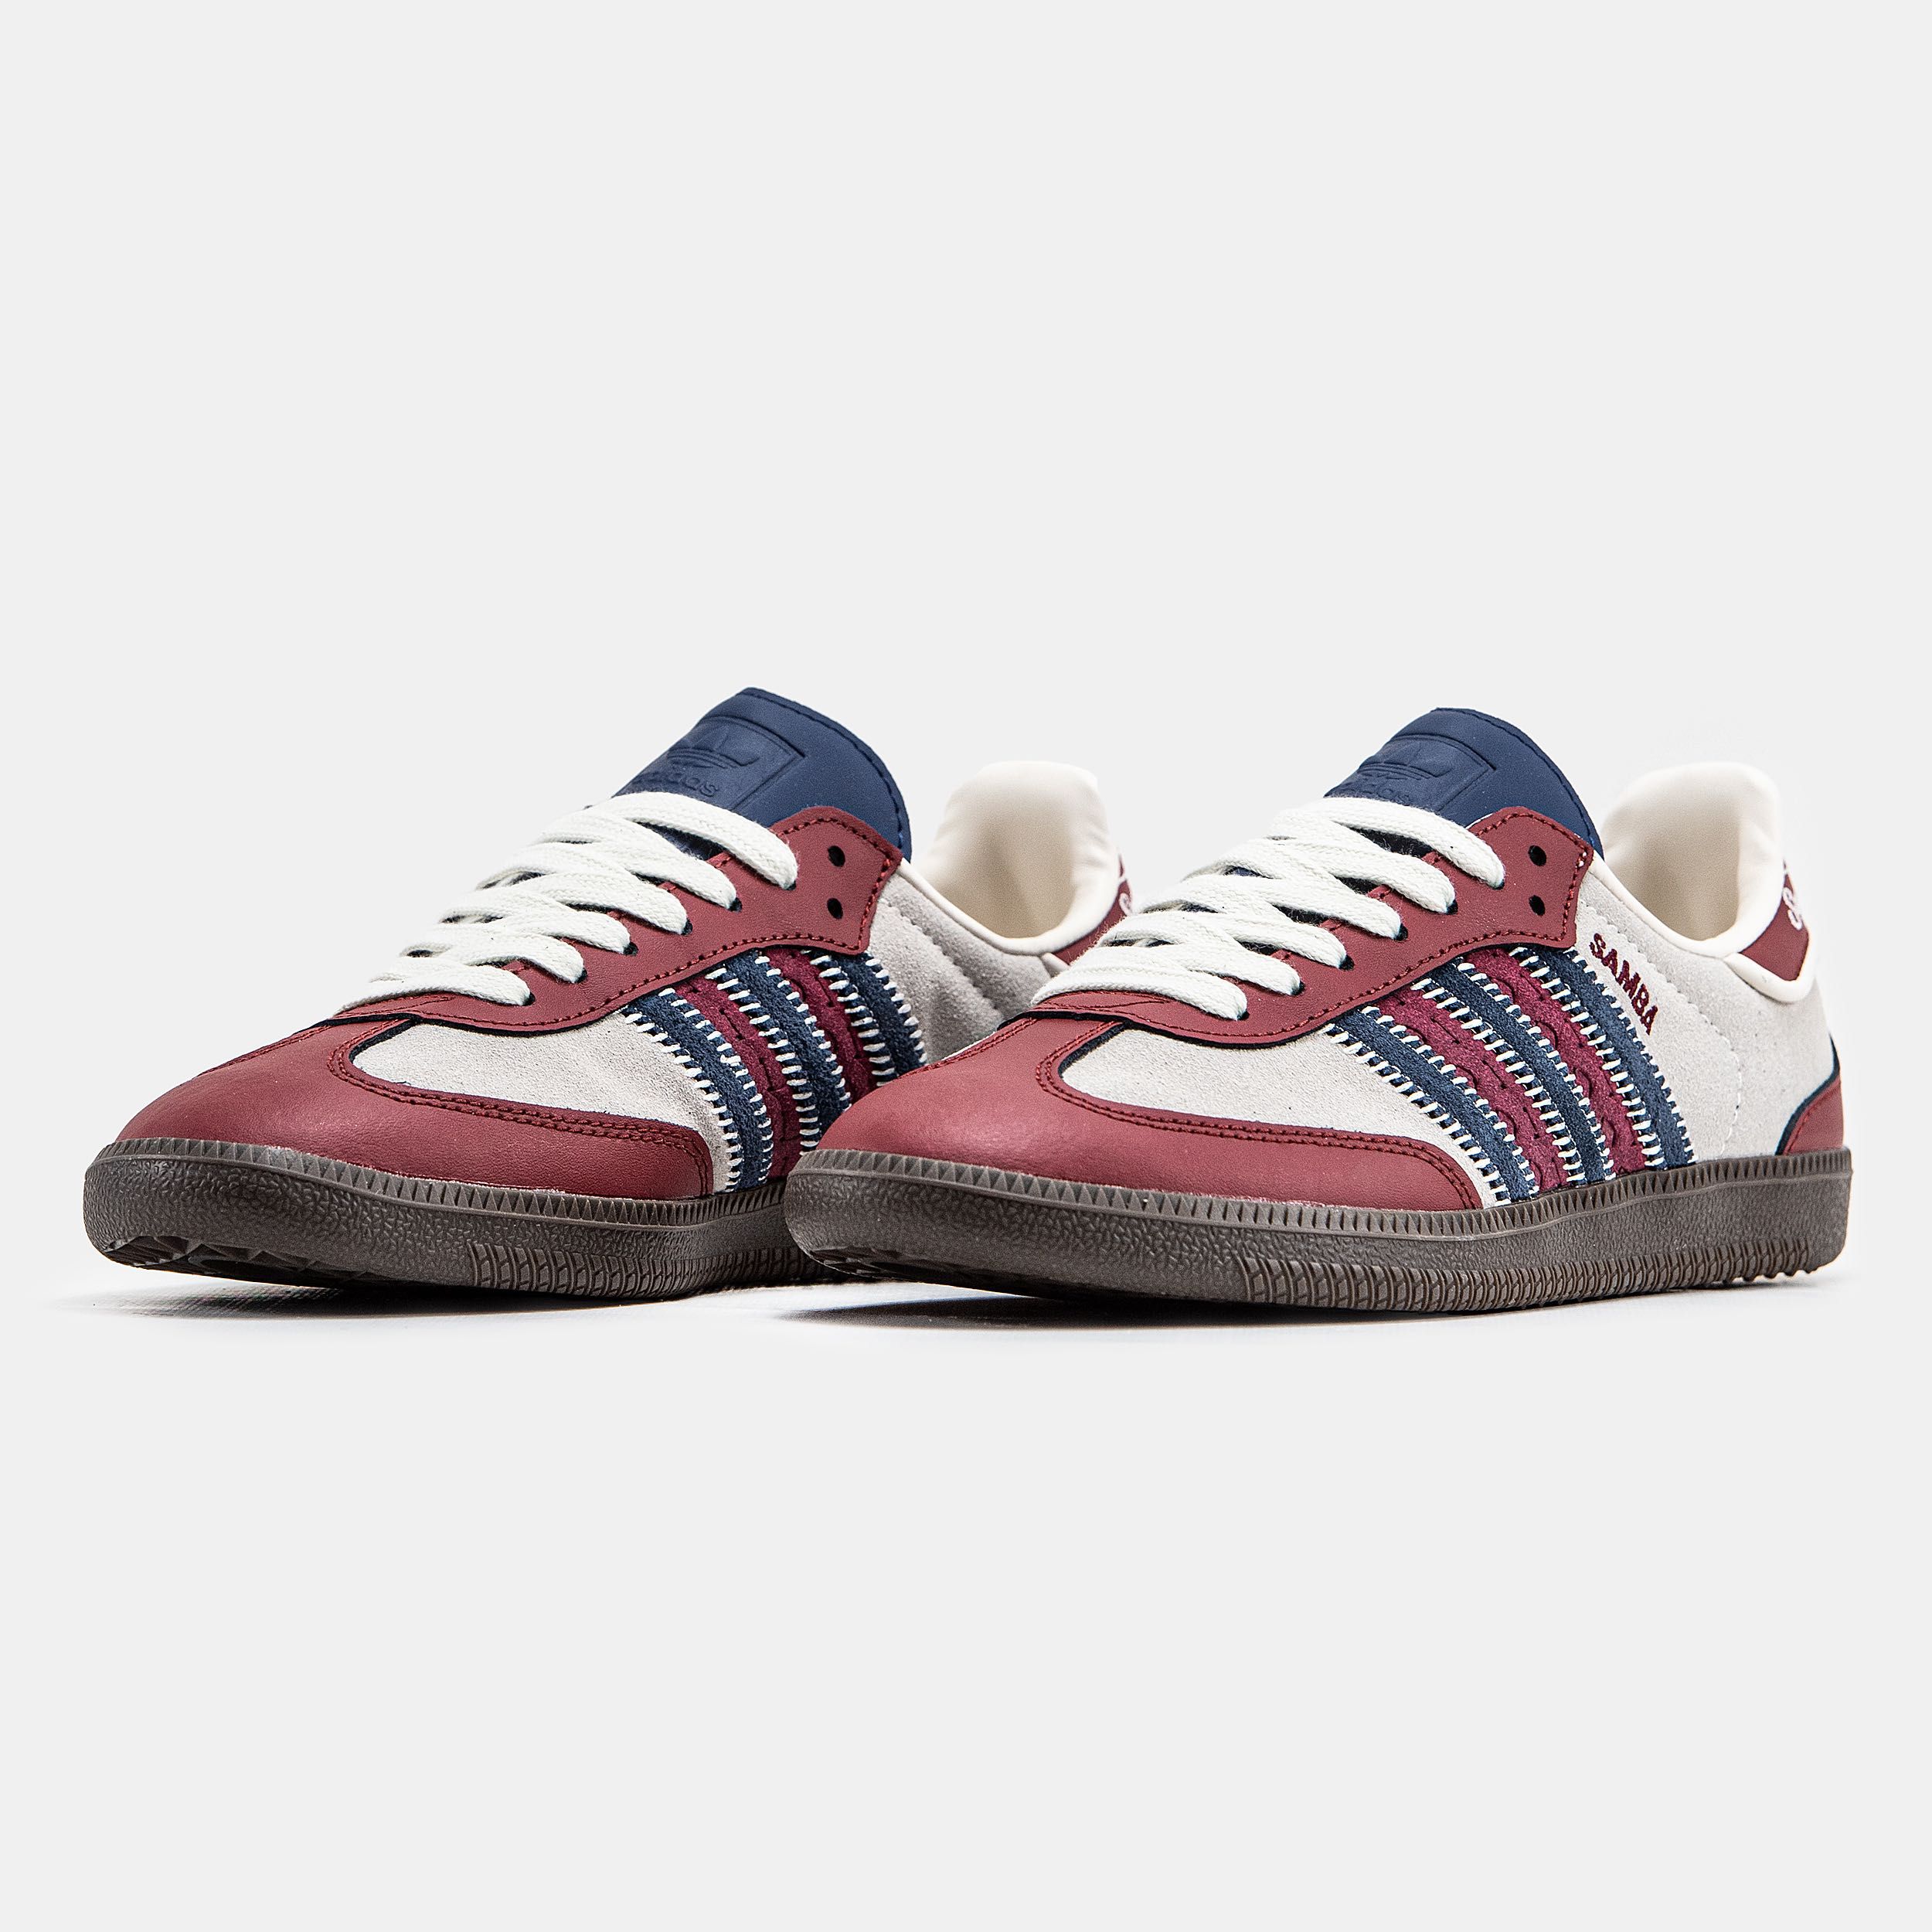 Мужские кроссовки Adidas Samba Red&Combo. Размеры 41-45